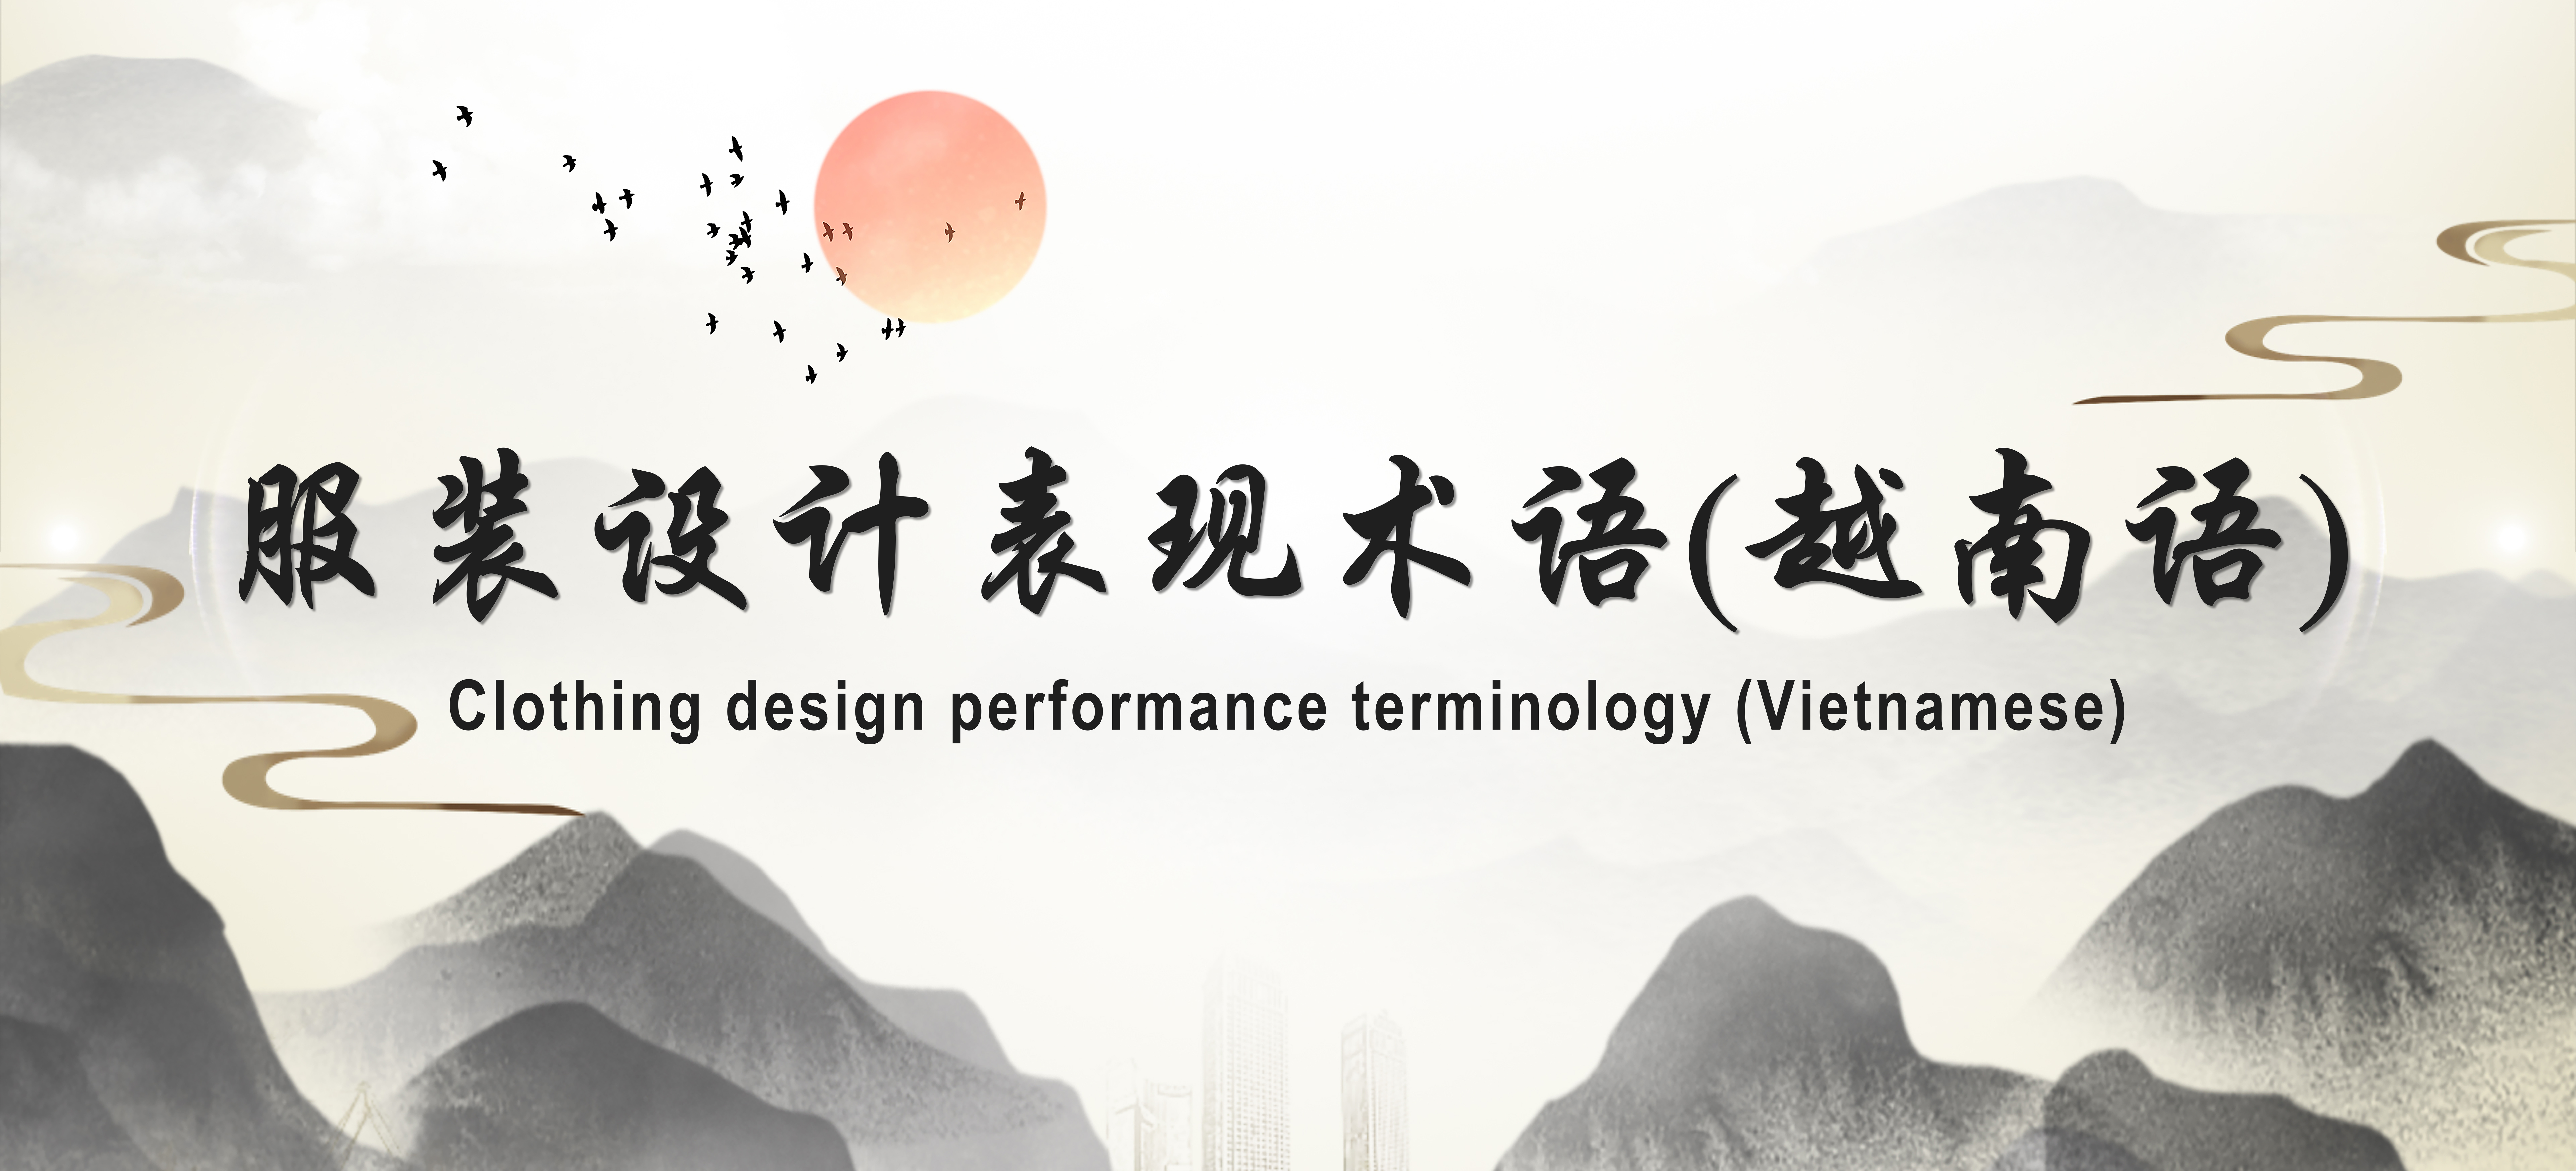 Clothing design performance terminology (Vietnamese)